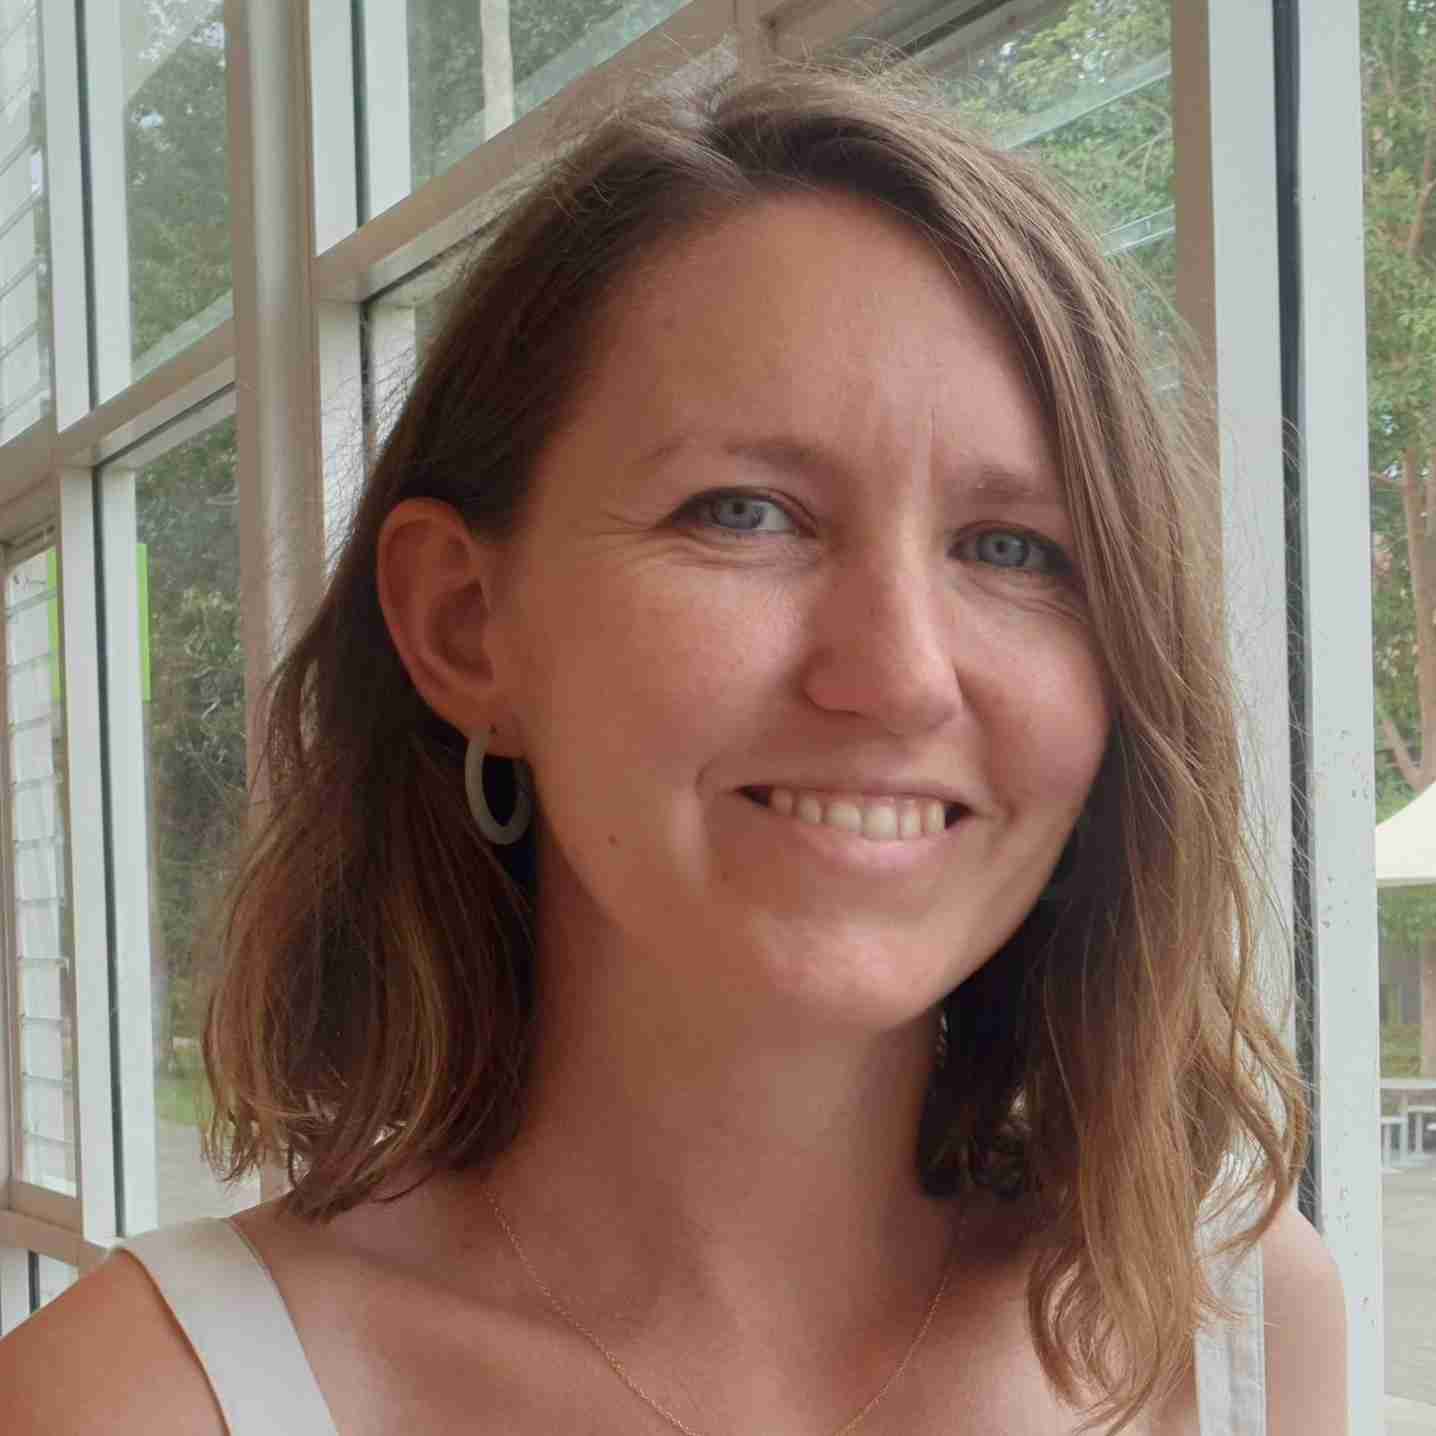 Profile image of Dr Laura Brettell